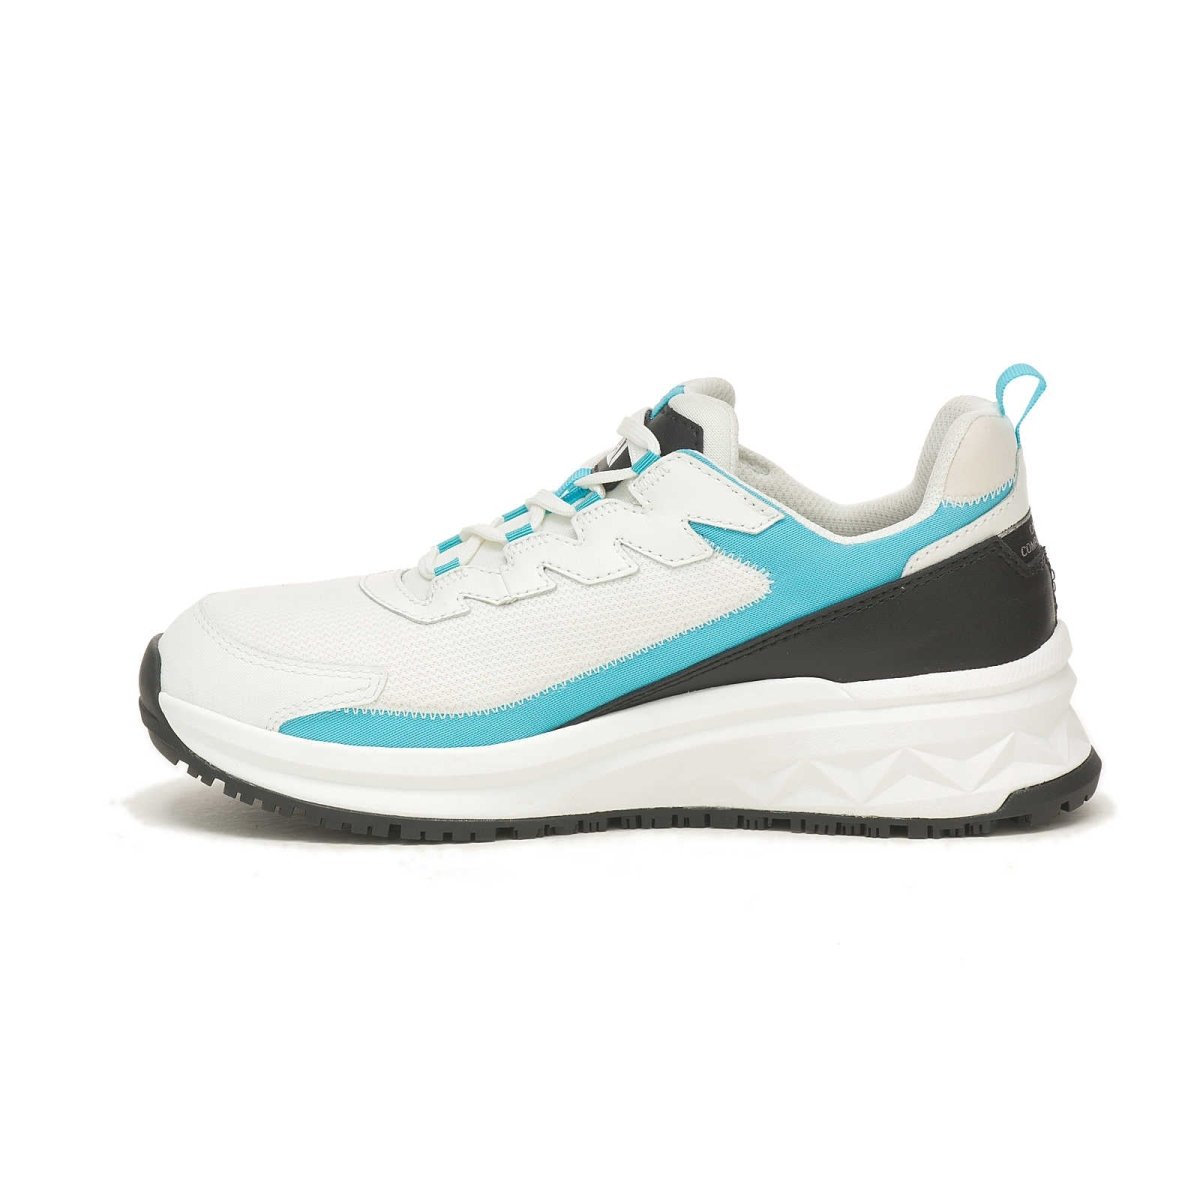 CATERPILLAR STREAMLINE RUNNER CARBON COMPOSITE TOE WOMEN'S WORK SHOE (P91600) IN BRIGHT WHITE/BLUE - TLW Shoes